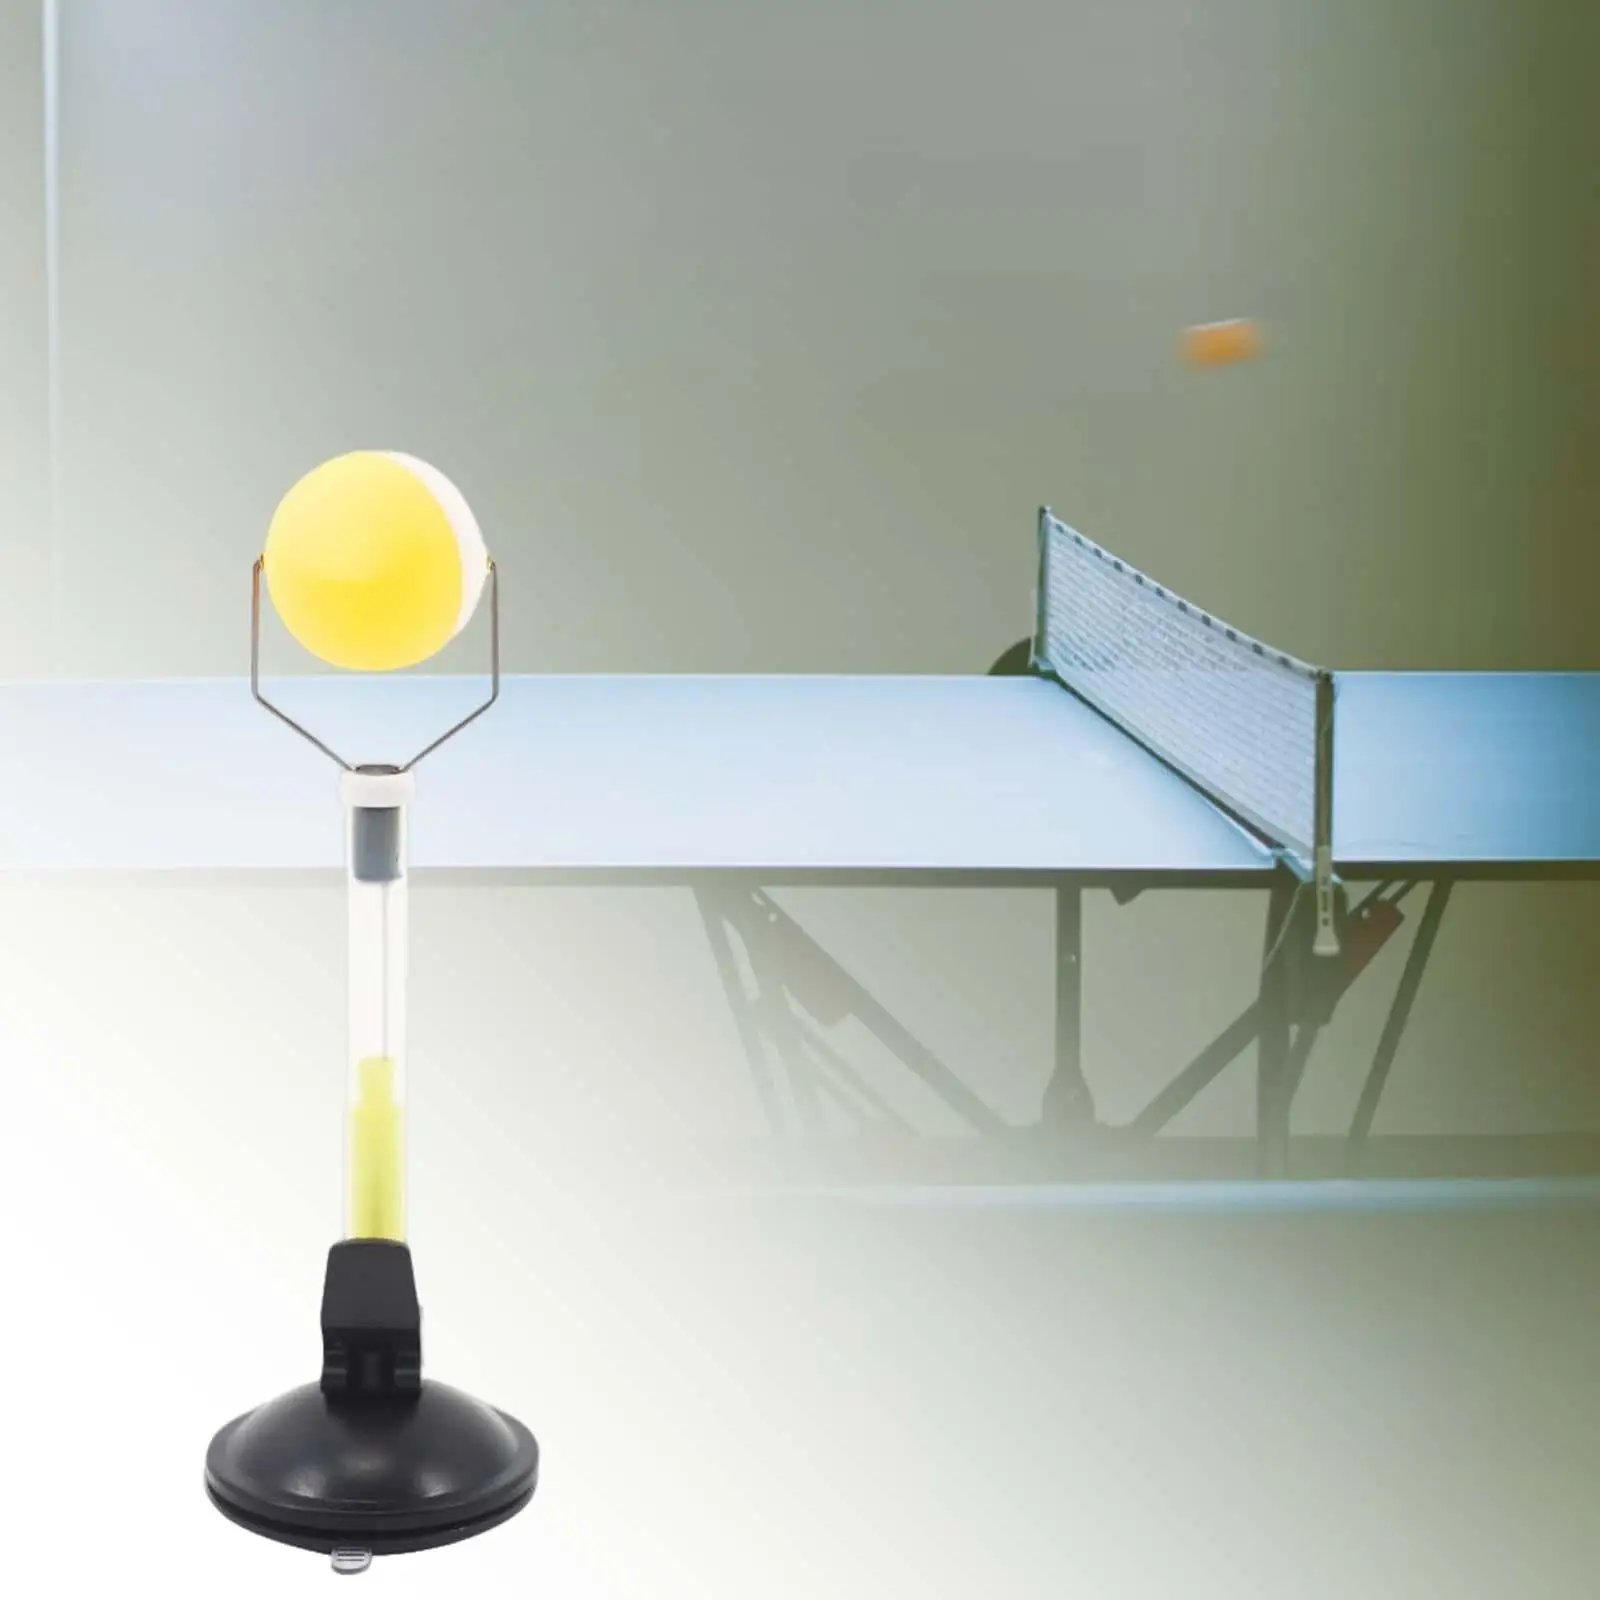 Pong Ball Machine Training Kit Self-Train Table Tennis Training Tools for